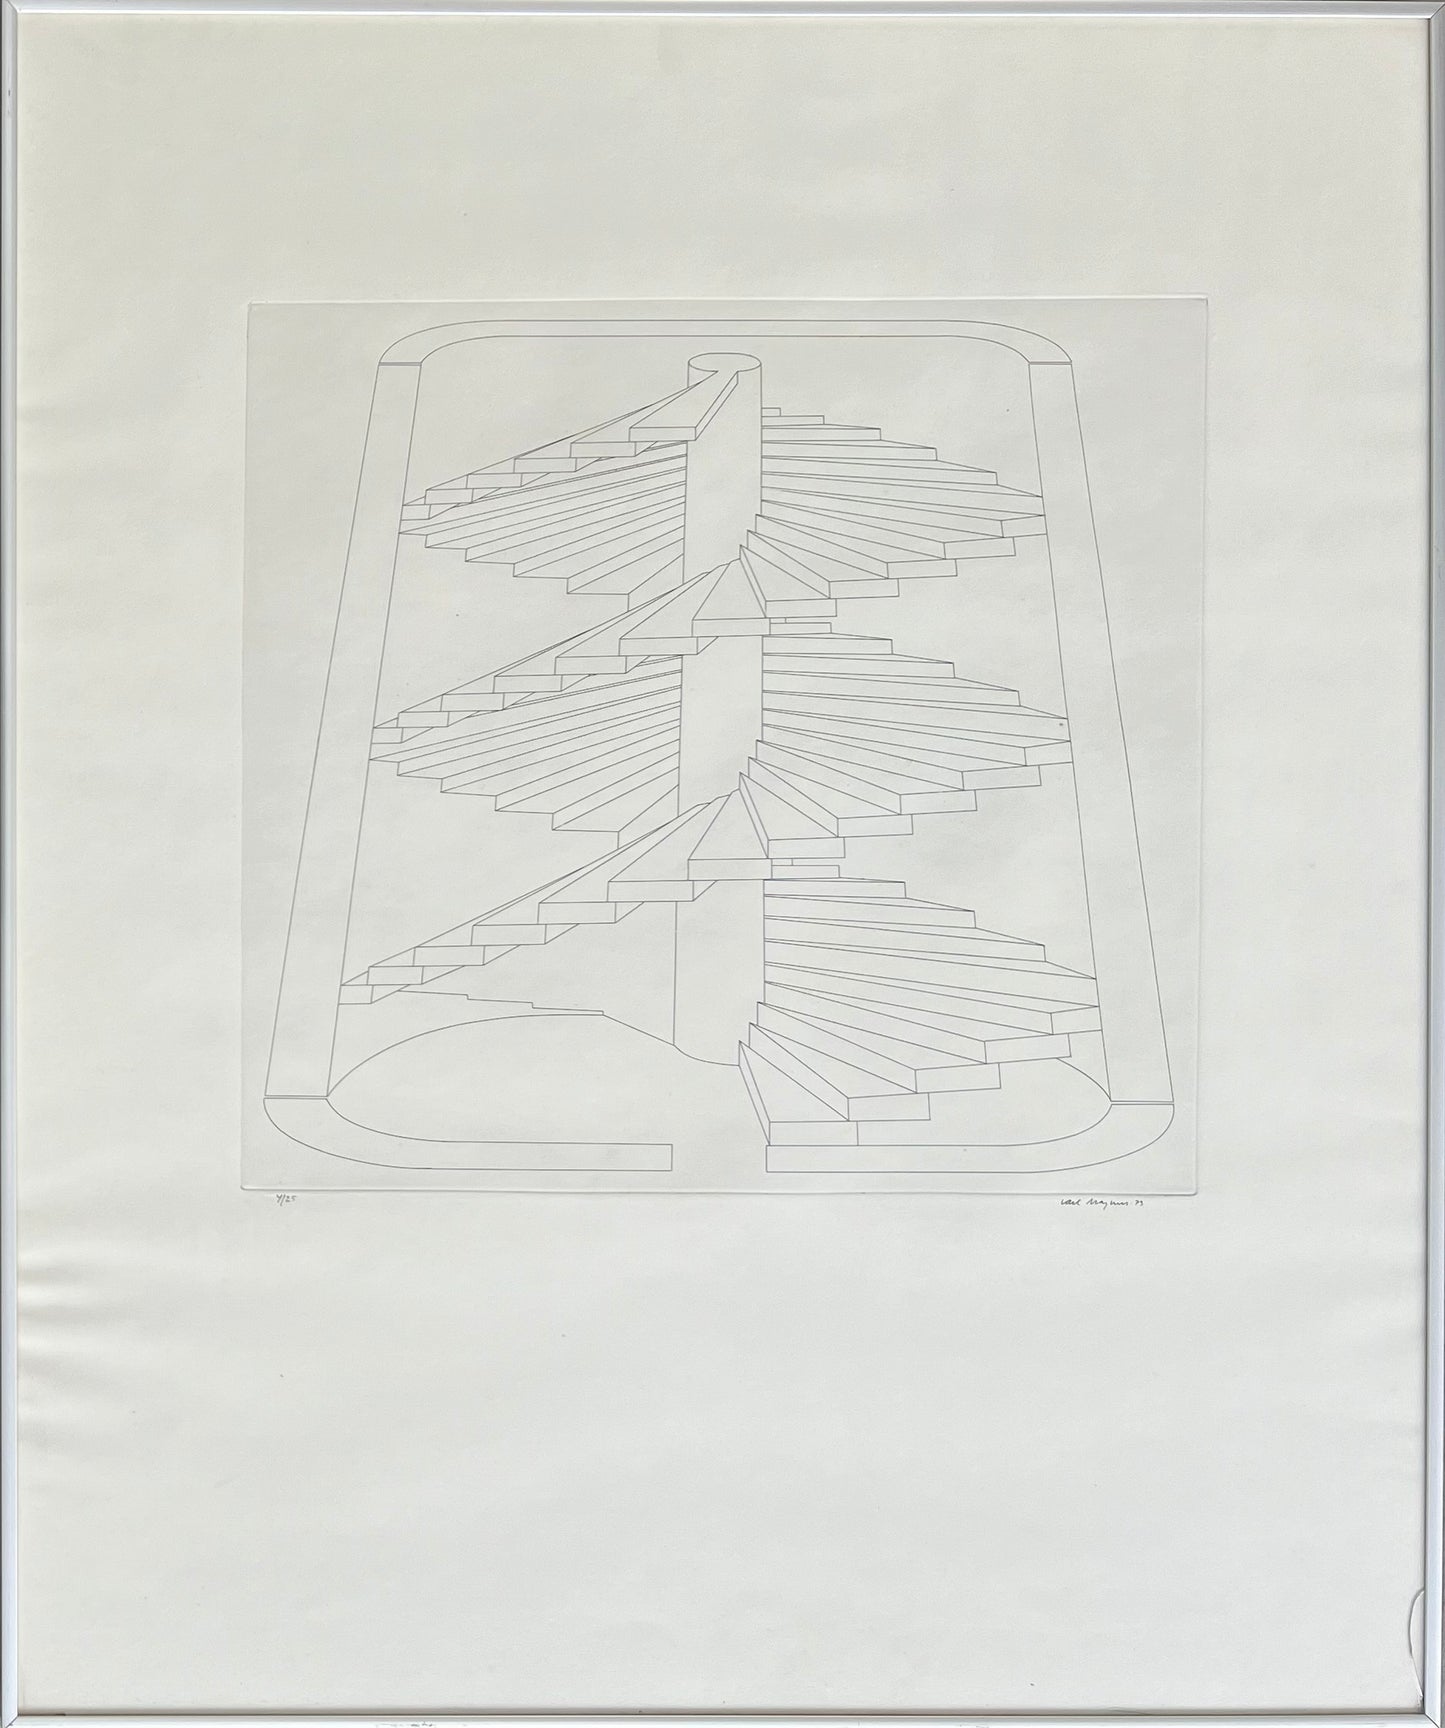 Carl Magnus. Composition, 1973